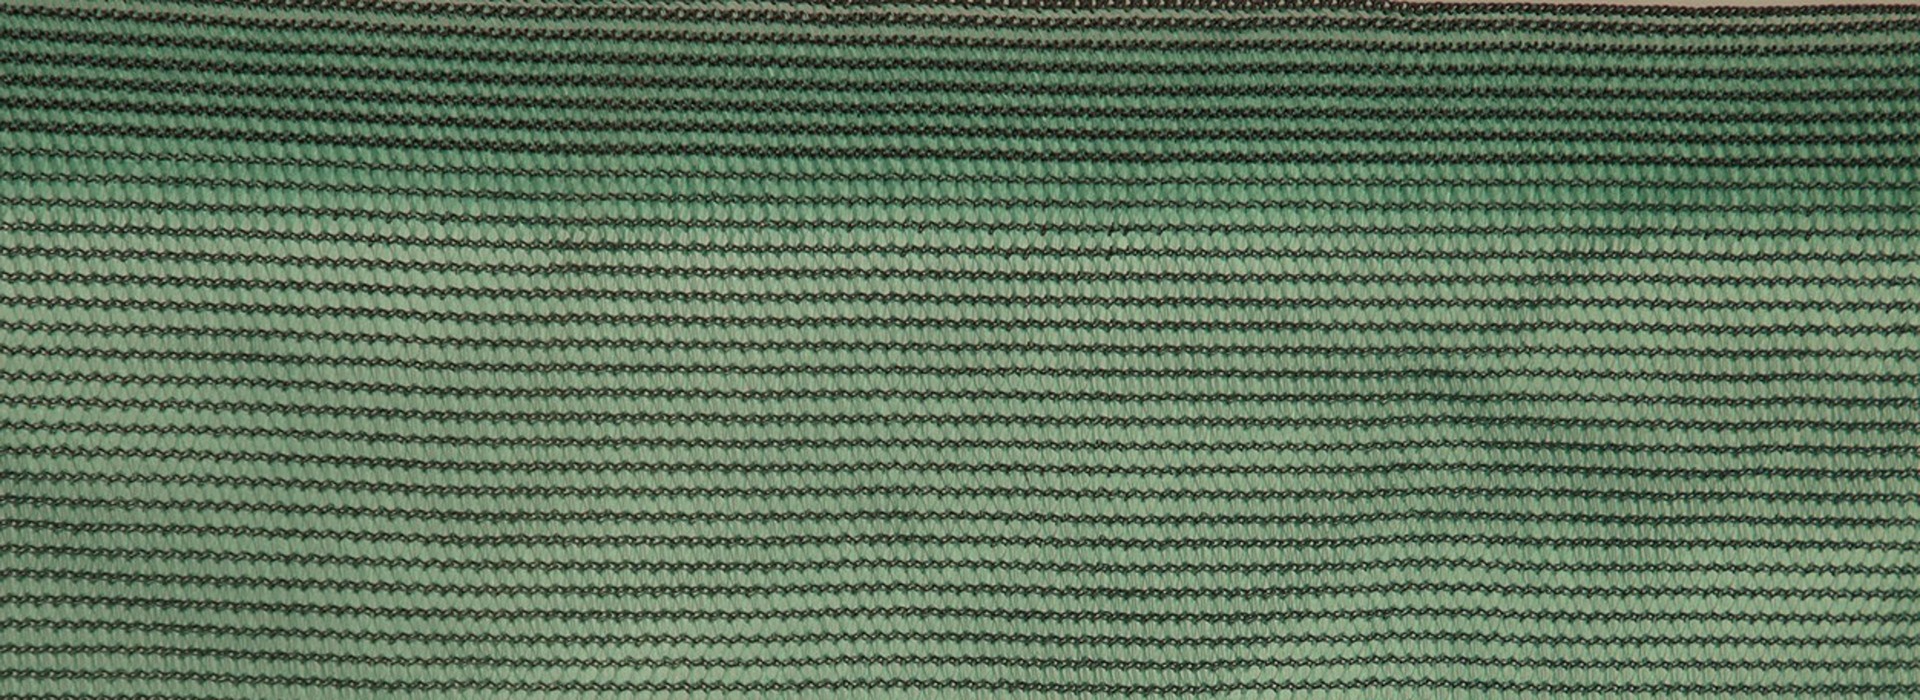 Knitted Monofilament | Garware Technical Fibres Ltd.